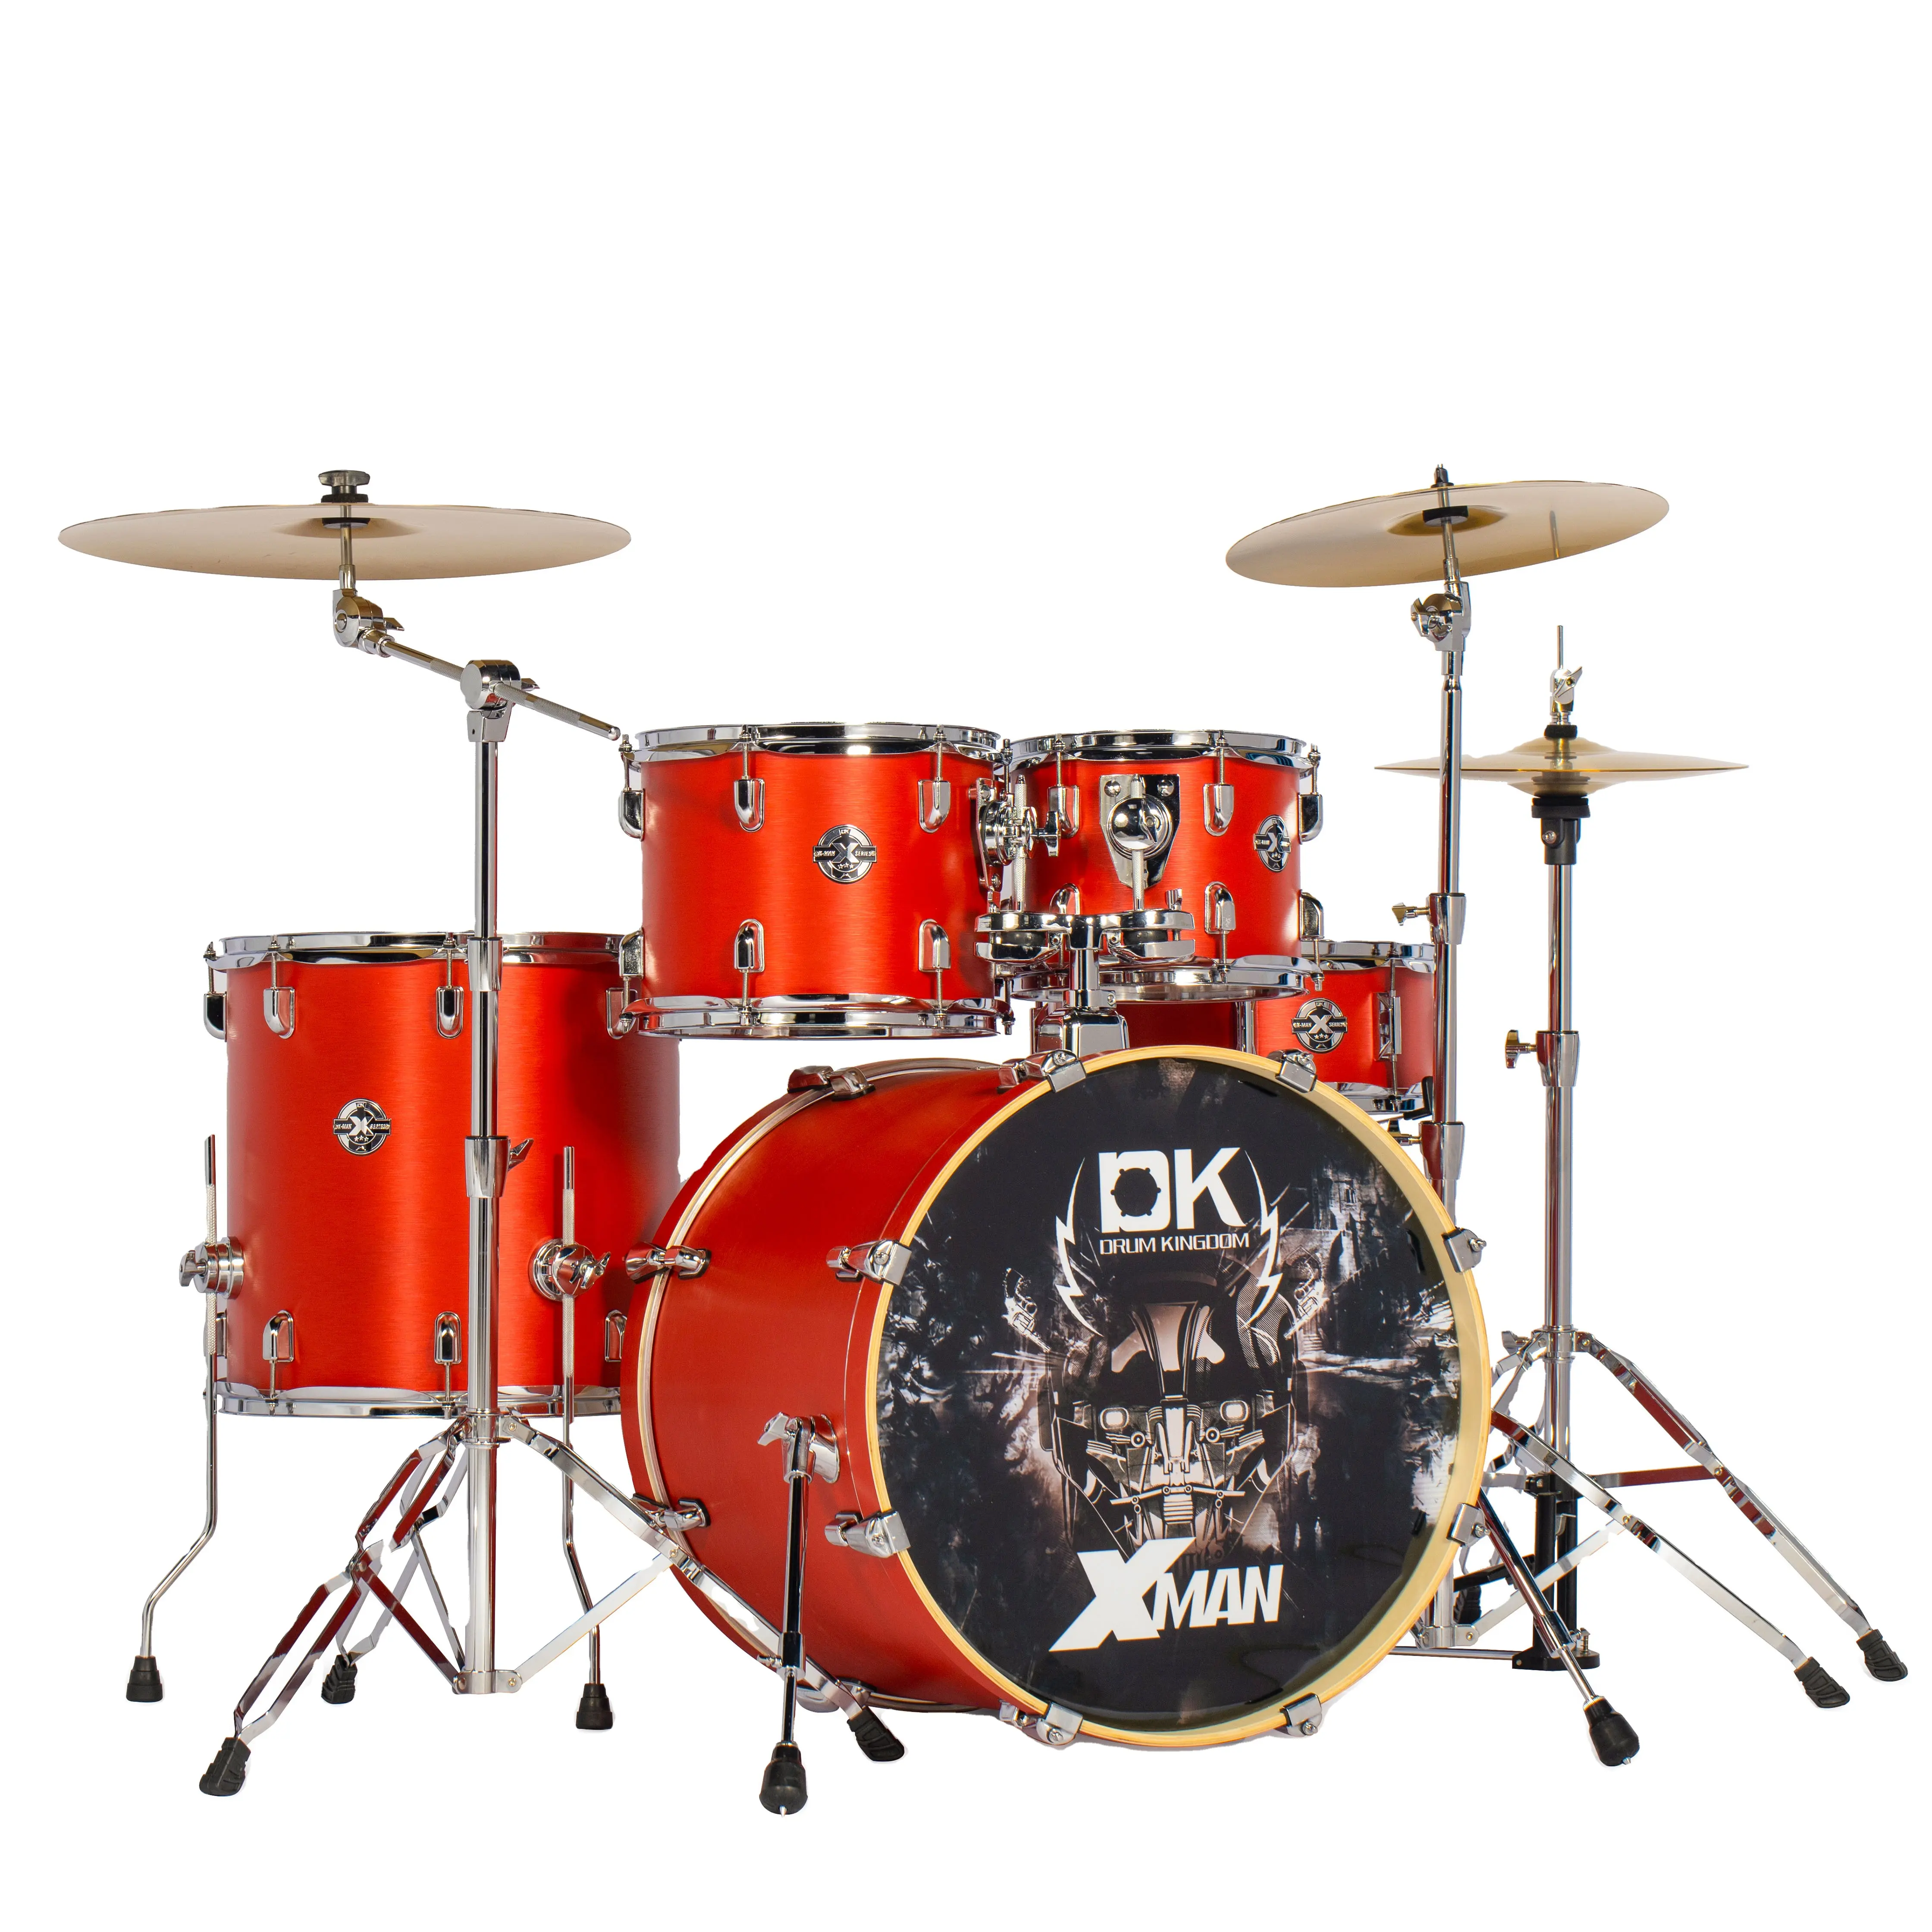 Personalizable Comprar Nivel Profesional Jazz Drum Set Instrumento Musical Profesional Drum Kit